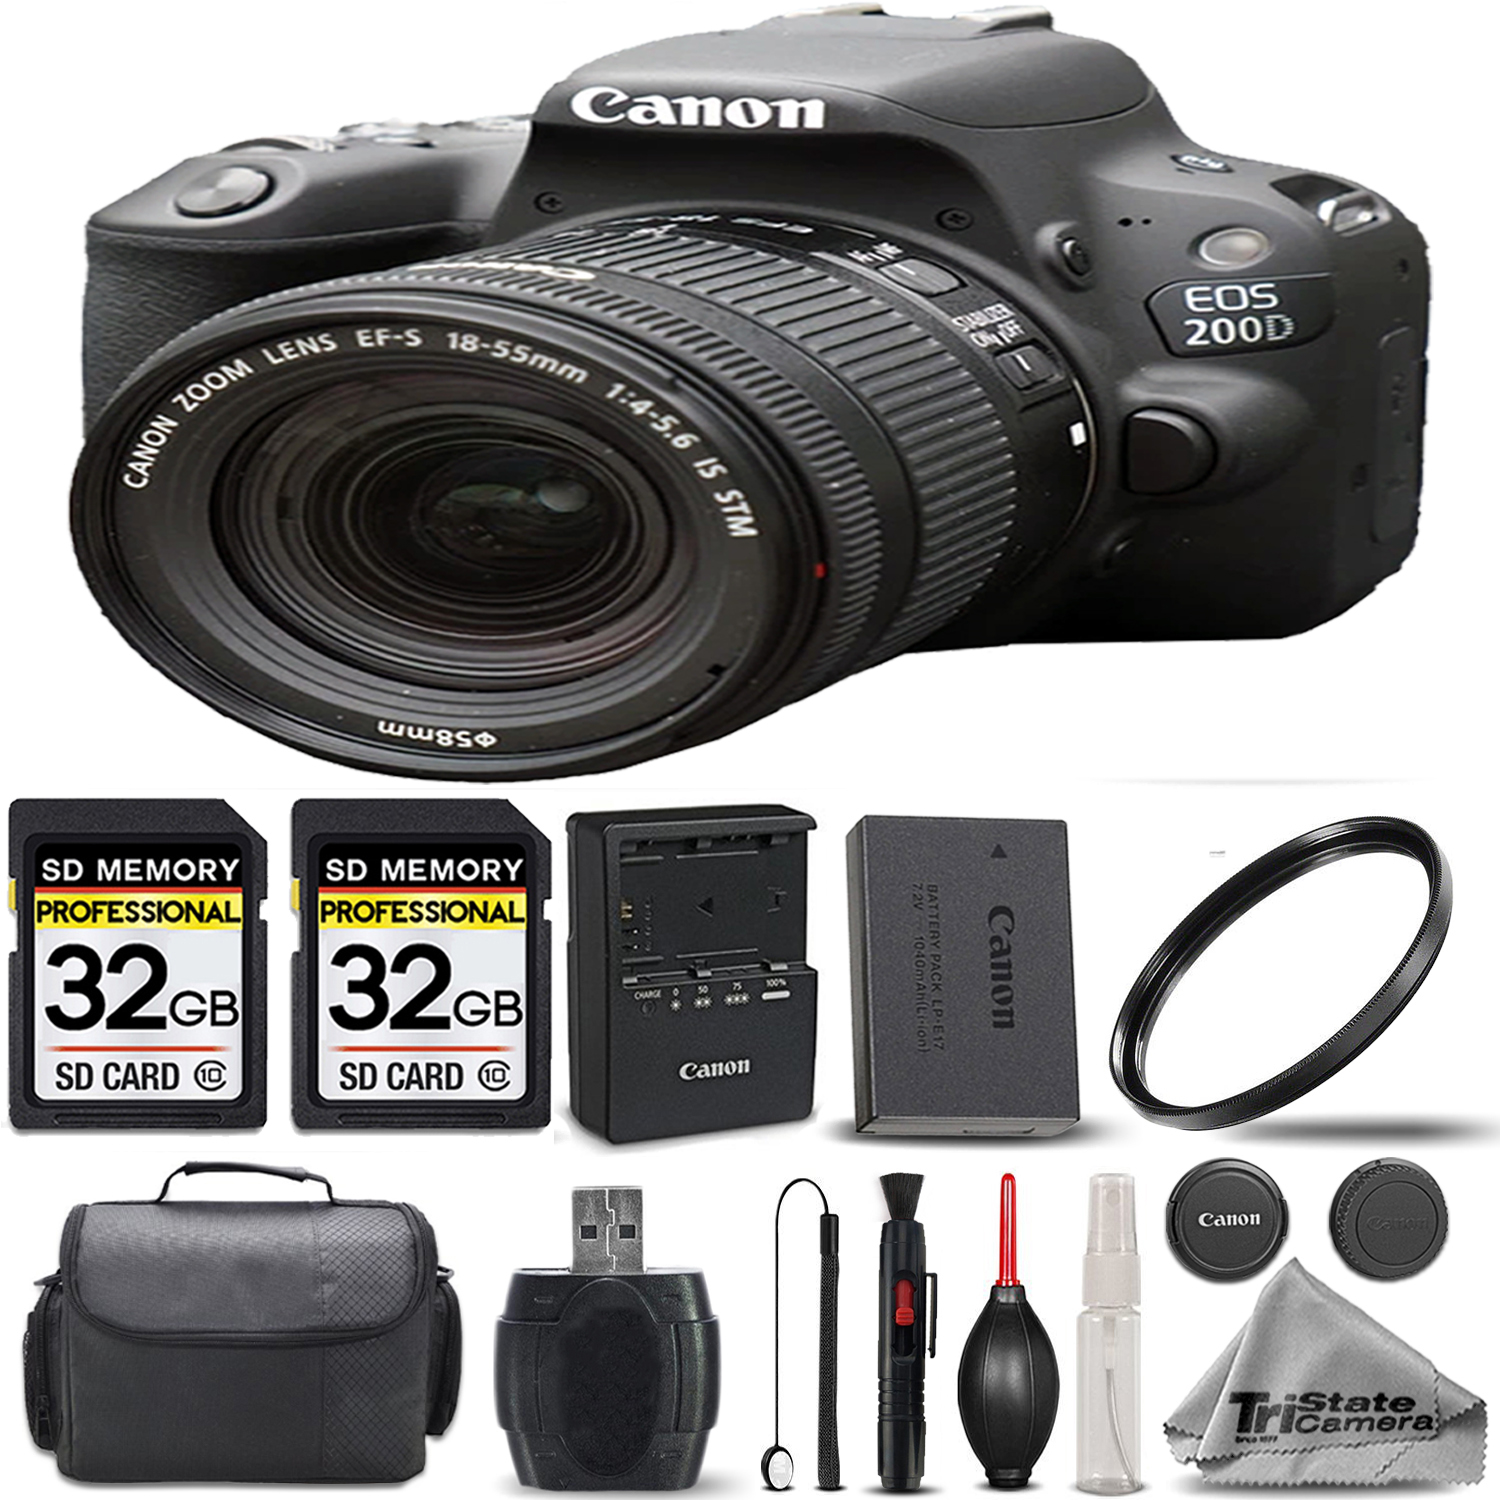 EOS Rebel 200D Camera(Black) + 18-55mm STM Lens + 64GB -Basic Accessory Kit *FREE SHIPPING*